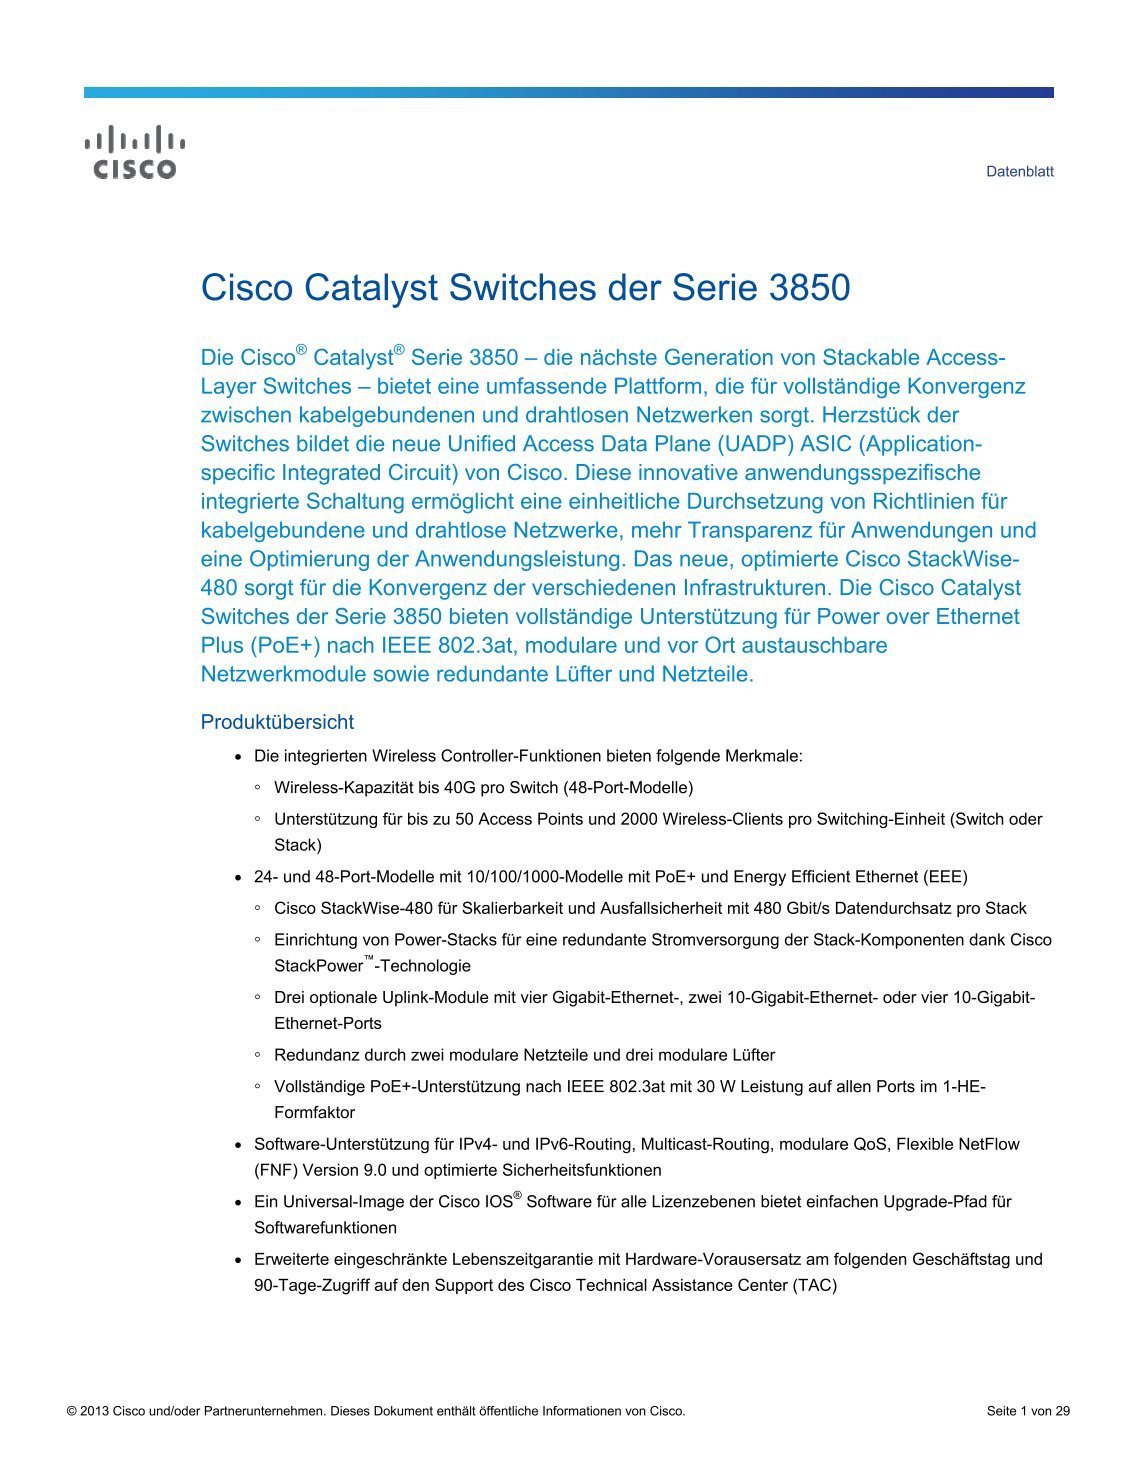 cisco 3850 switch manual